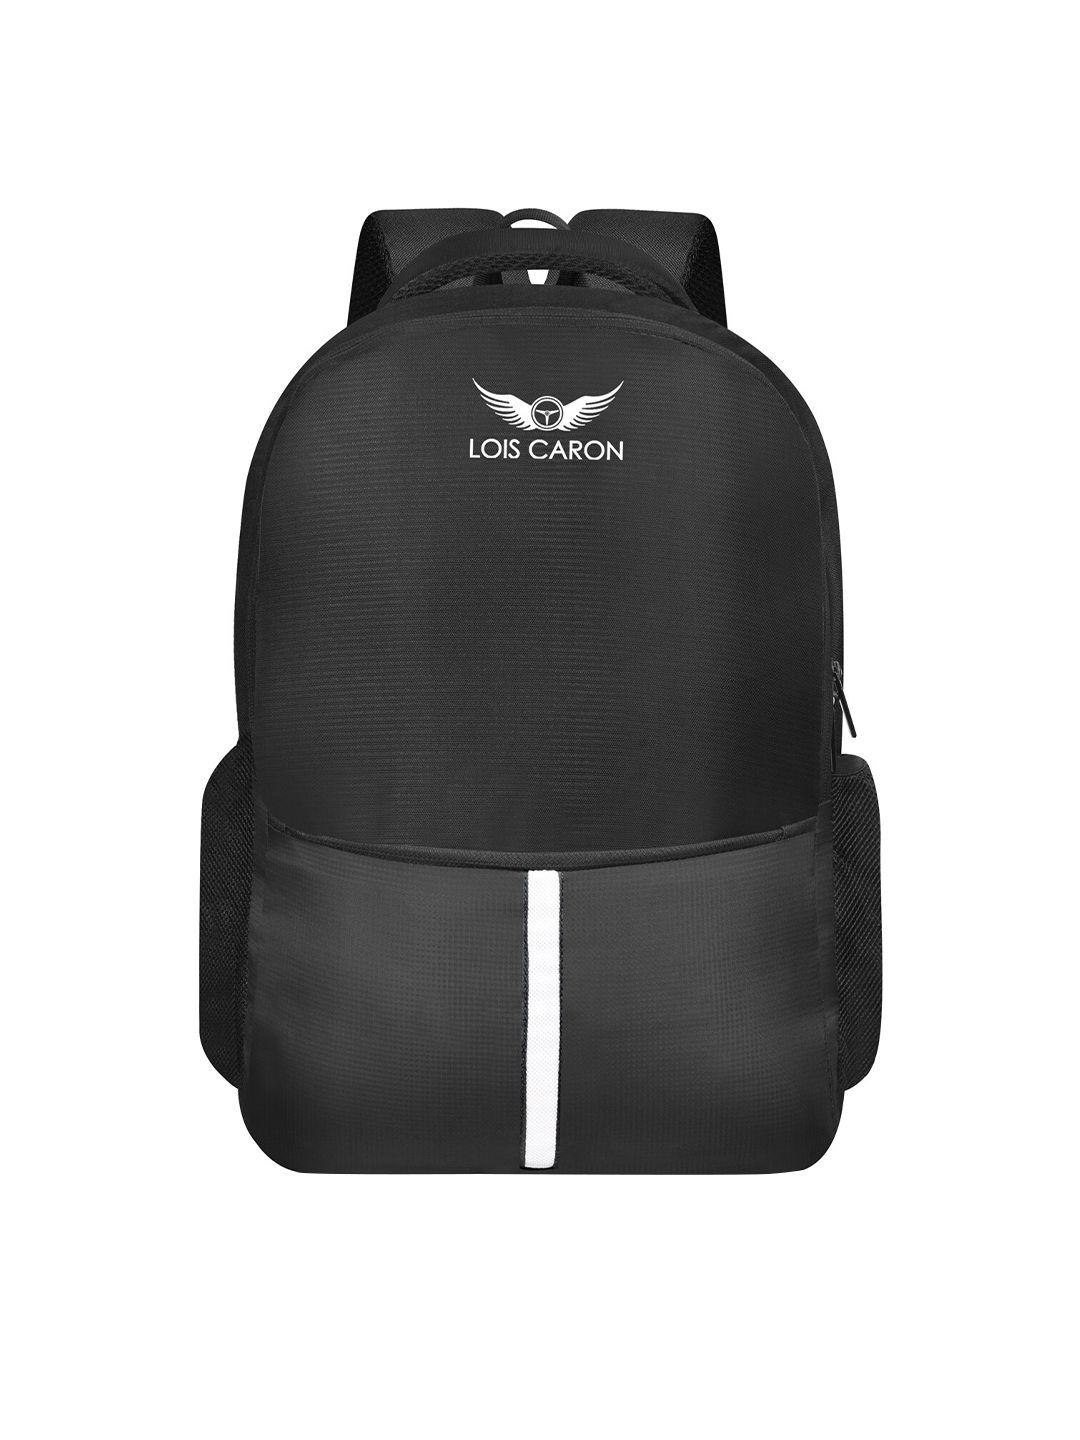 lois caron unisex black & white colourblocked backpack